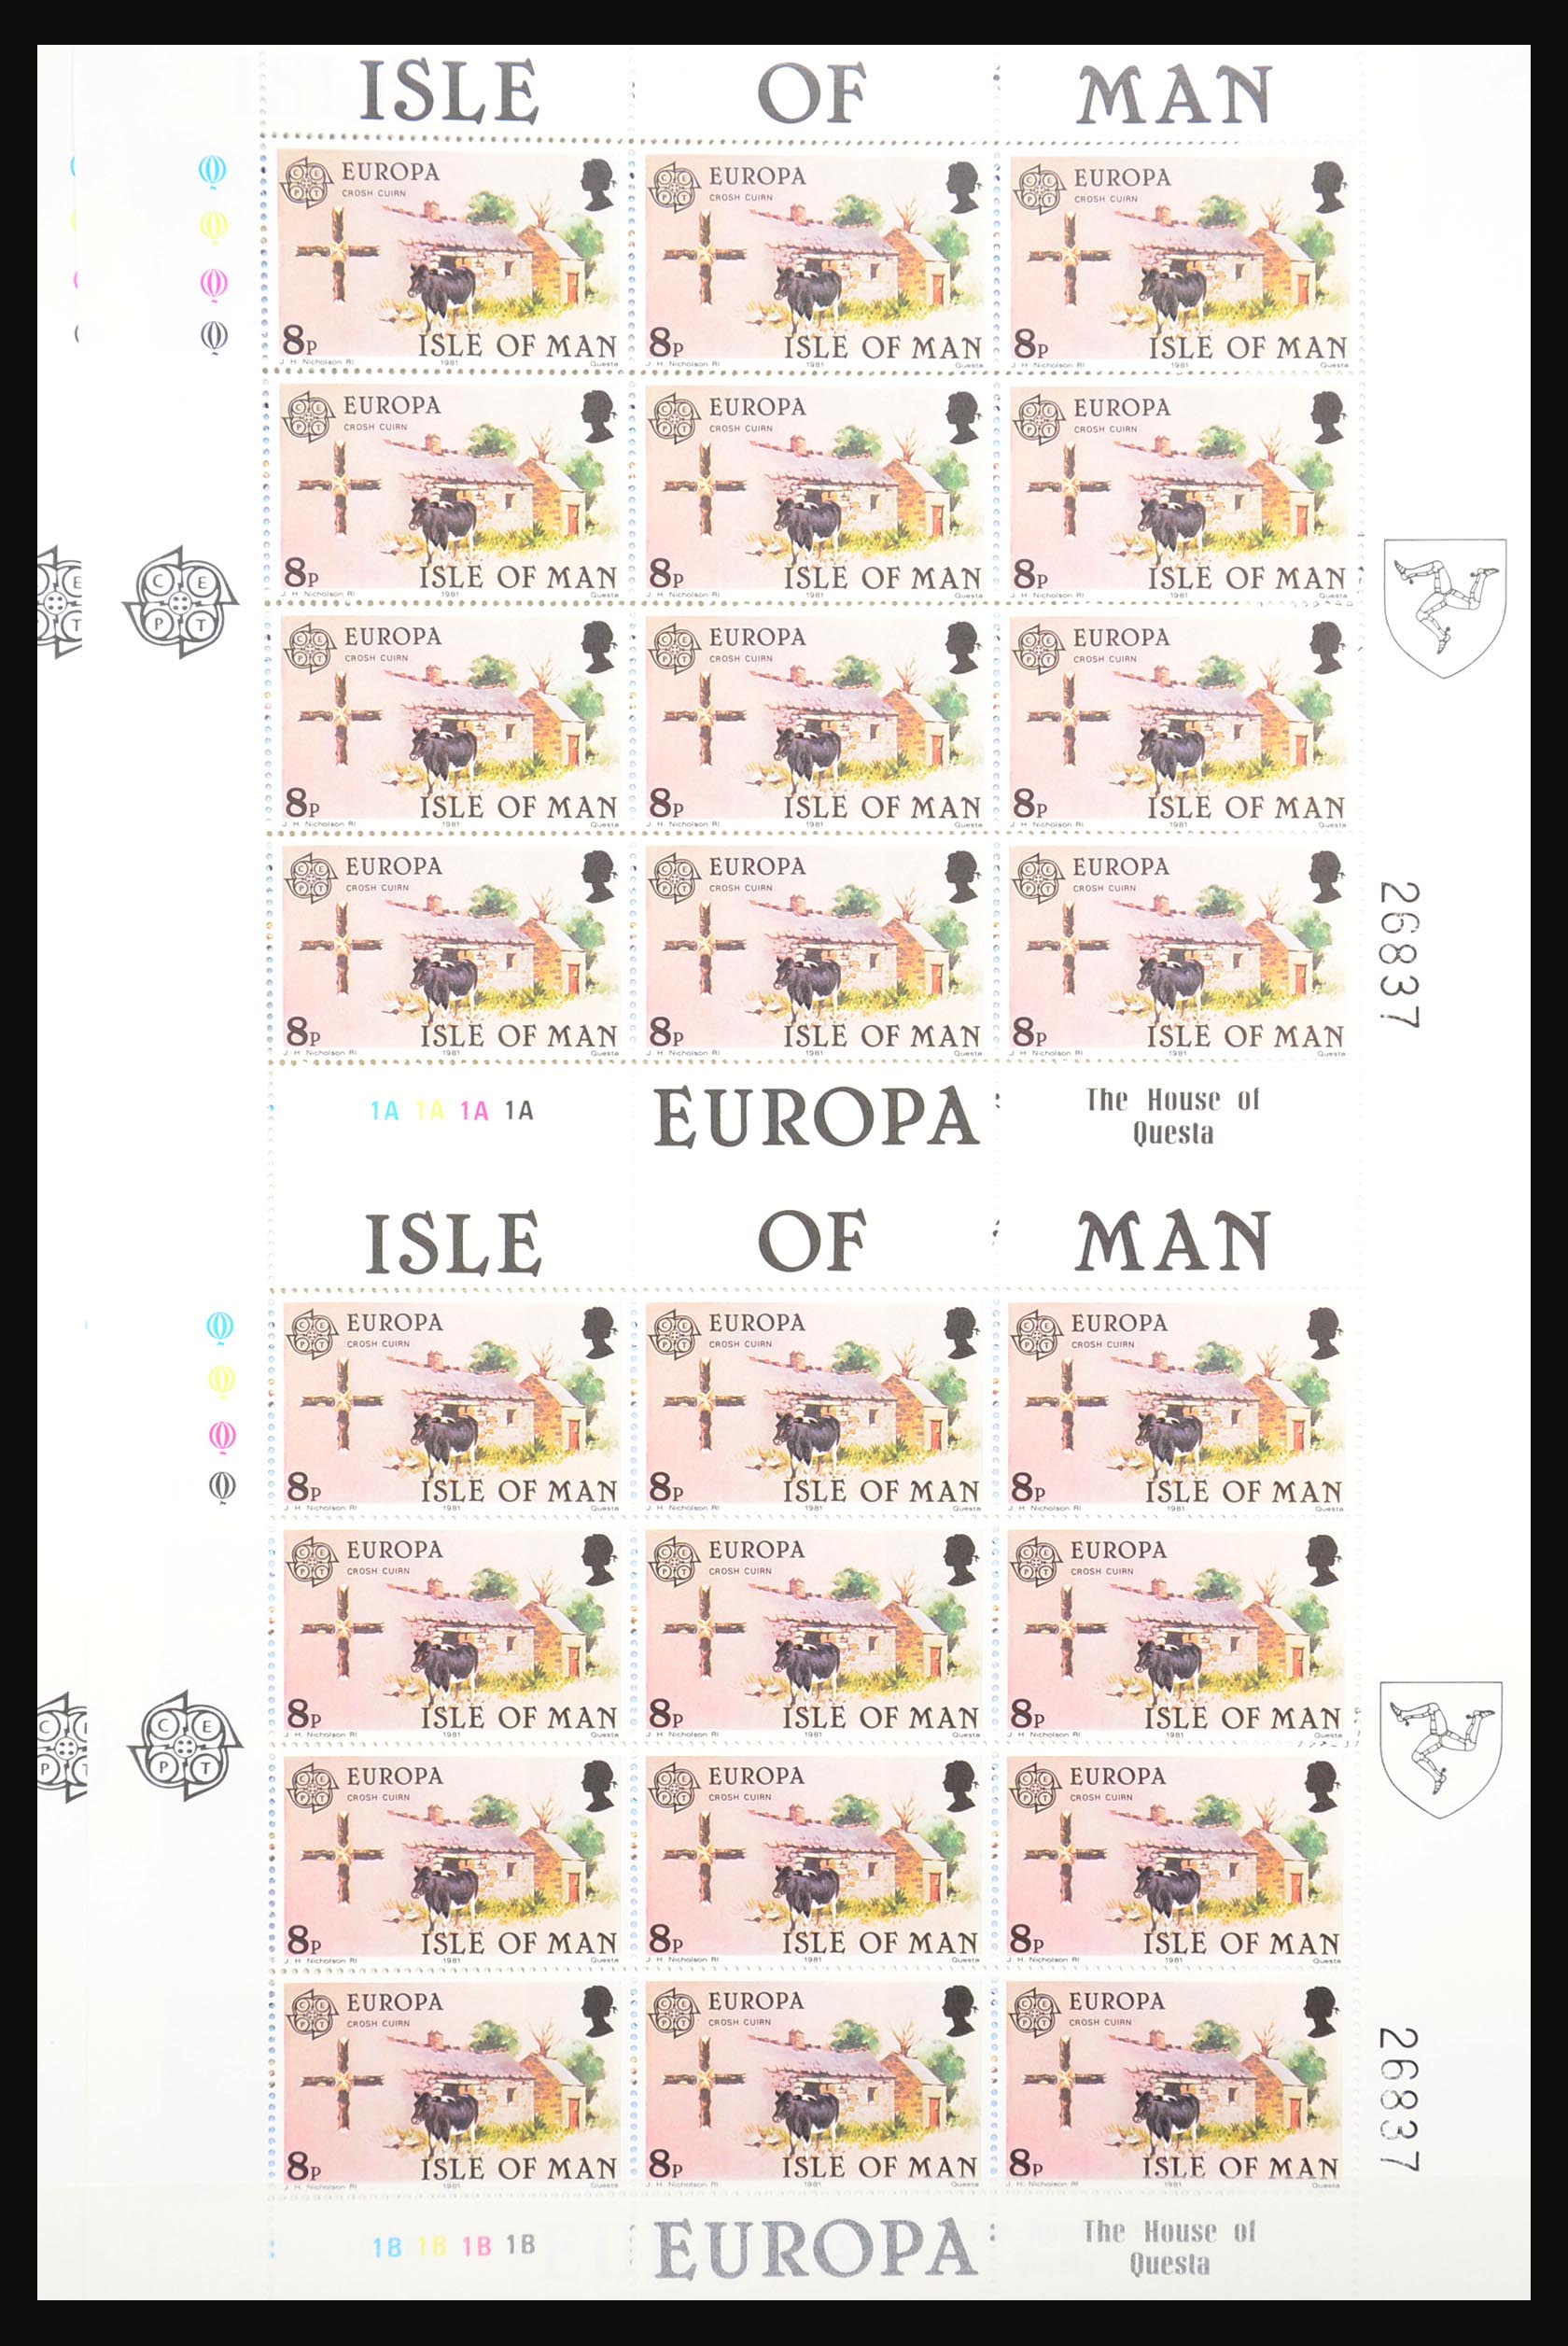 31249 003 - 31249 Channel Islands souvenir sheets and sheetlets 1978-1997.